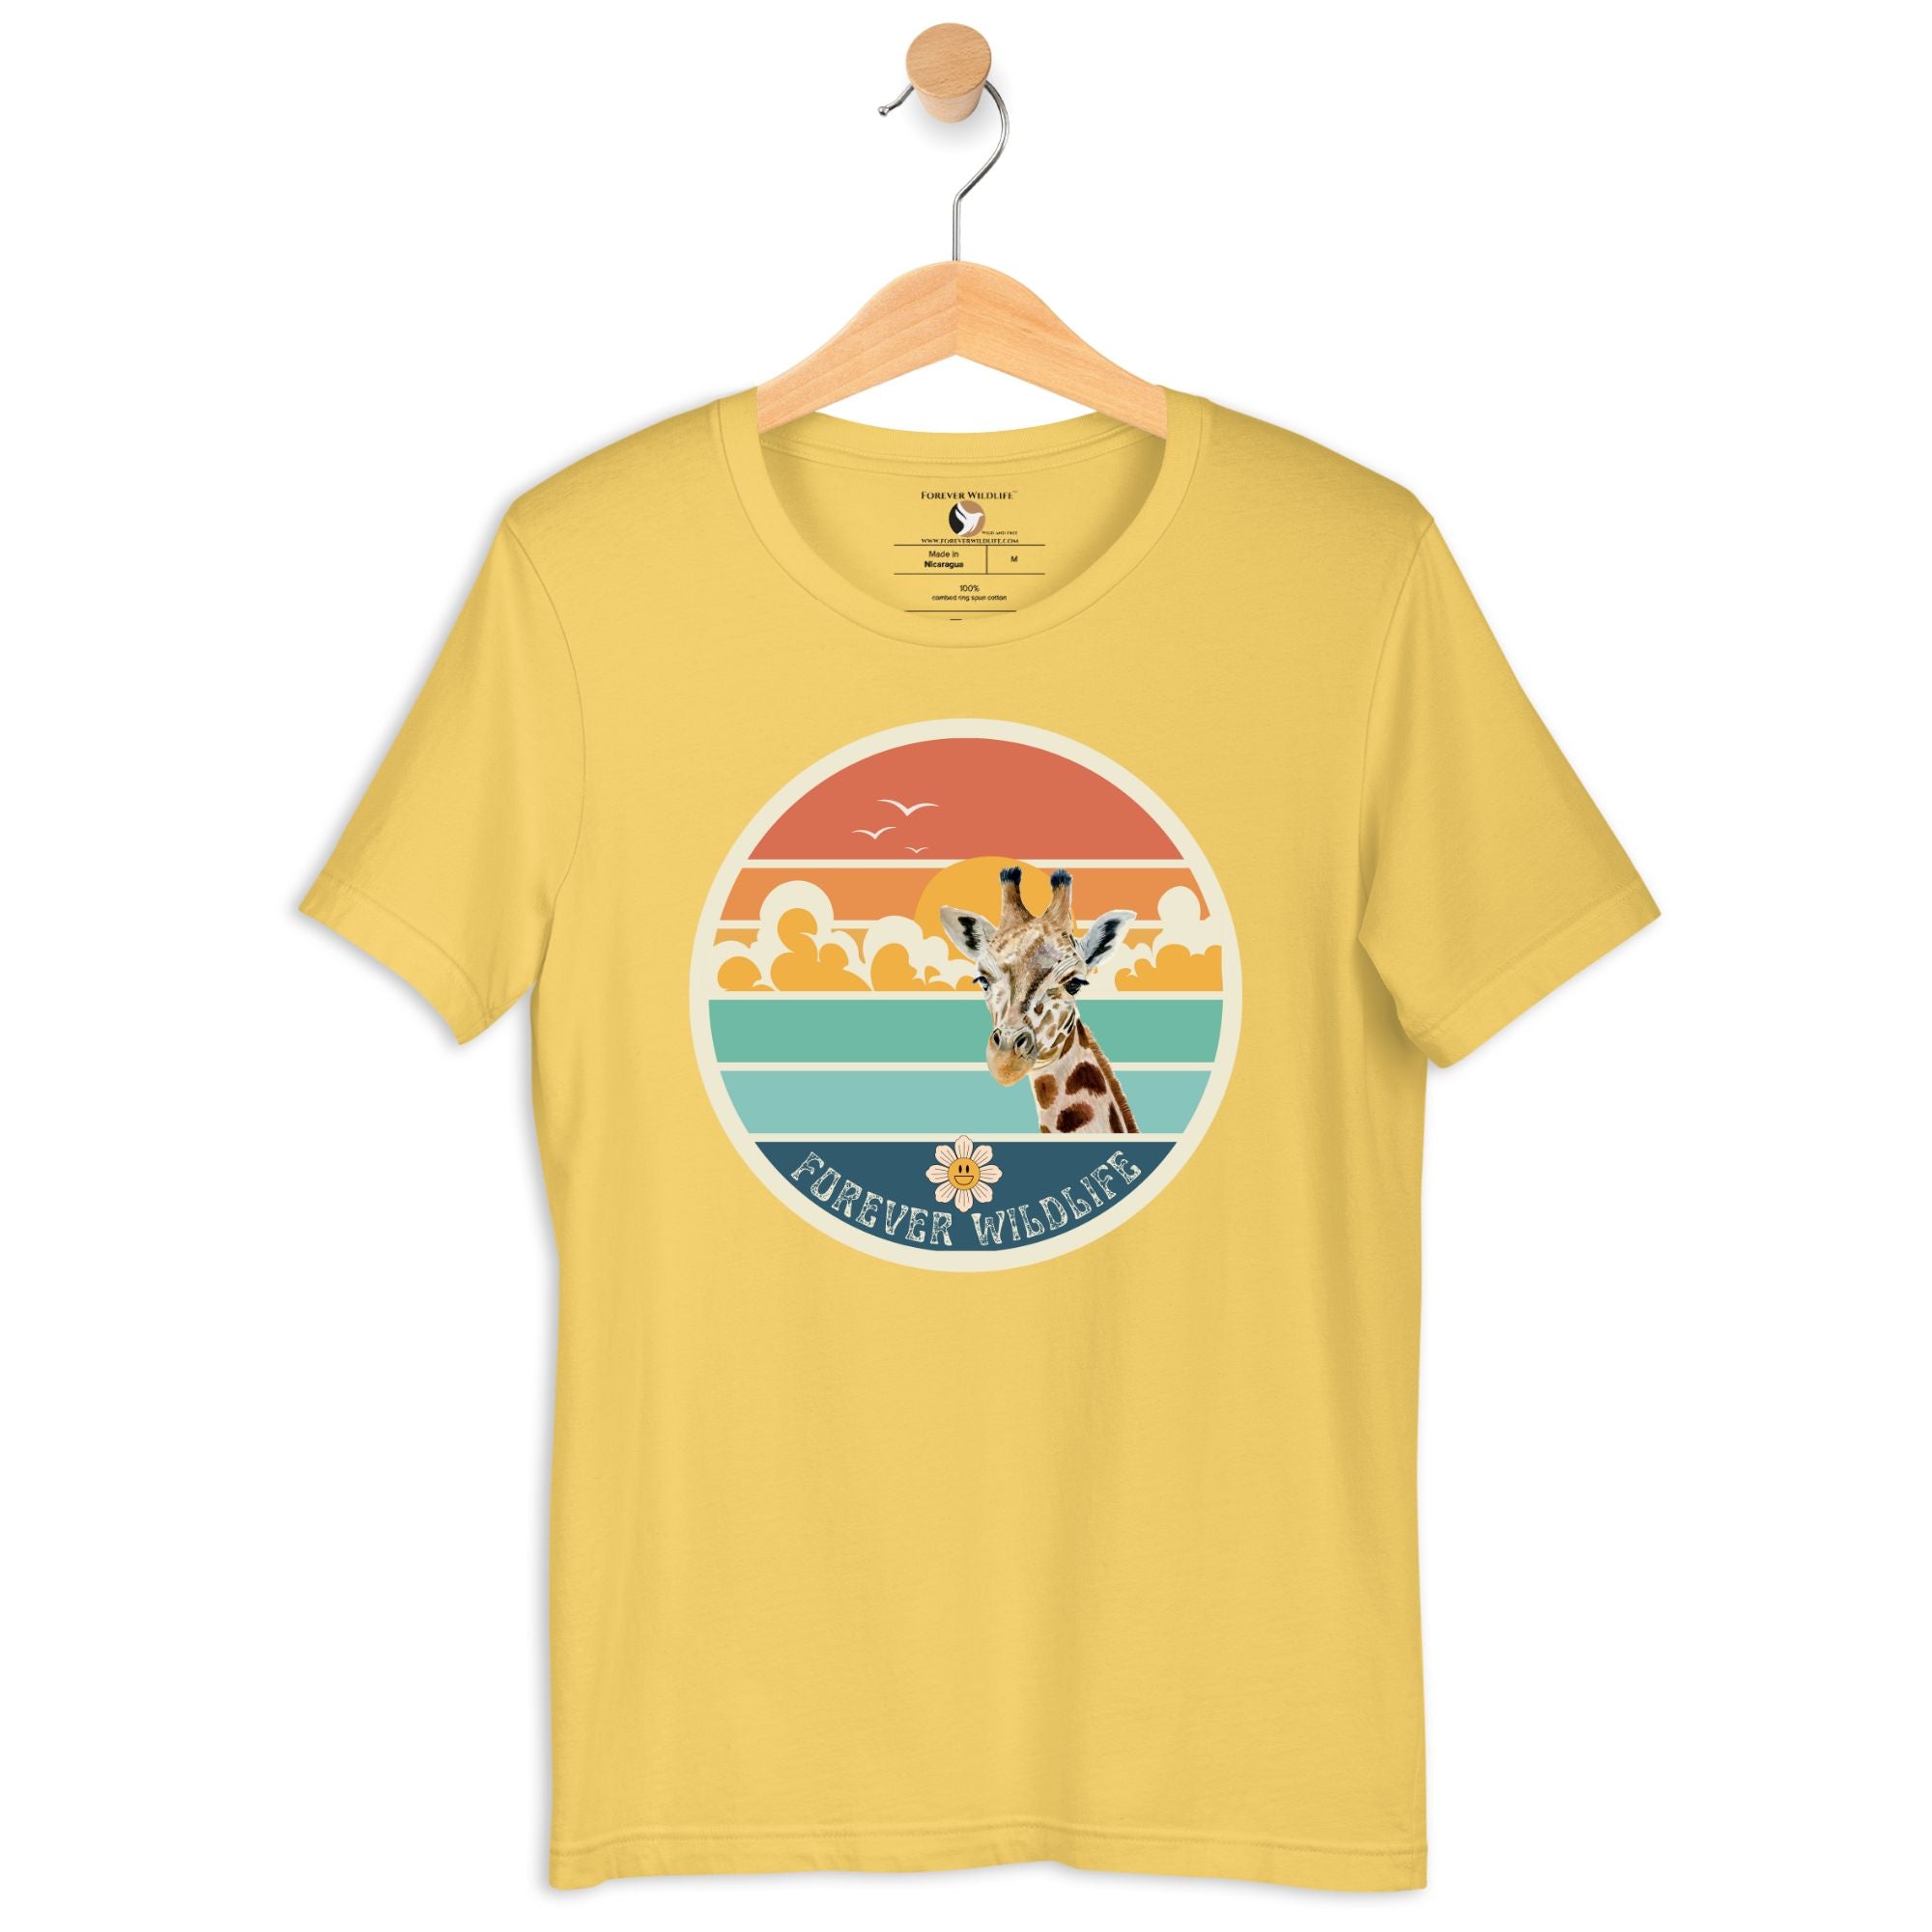 Giraffe T-Shirt in yellow – Premium Wildlife T-Shirt Design, Wildlife Clothing & Apparel from Forever Wildlife